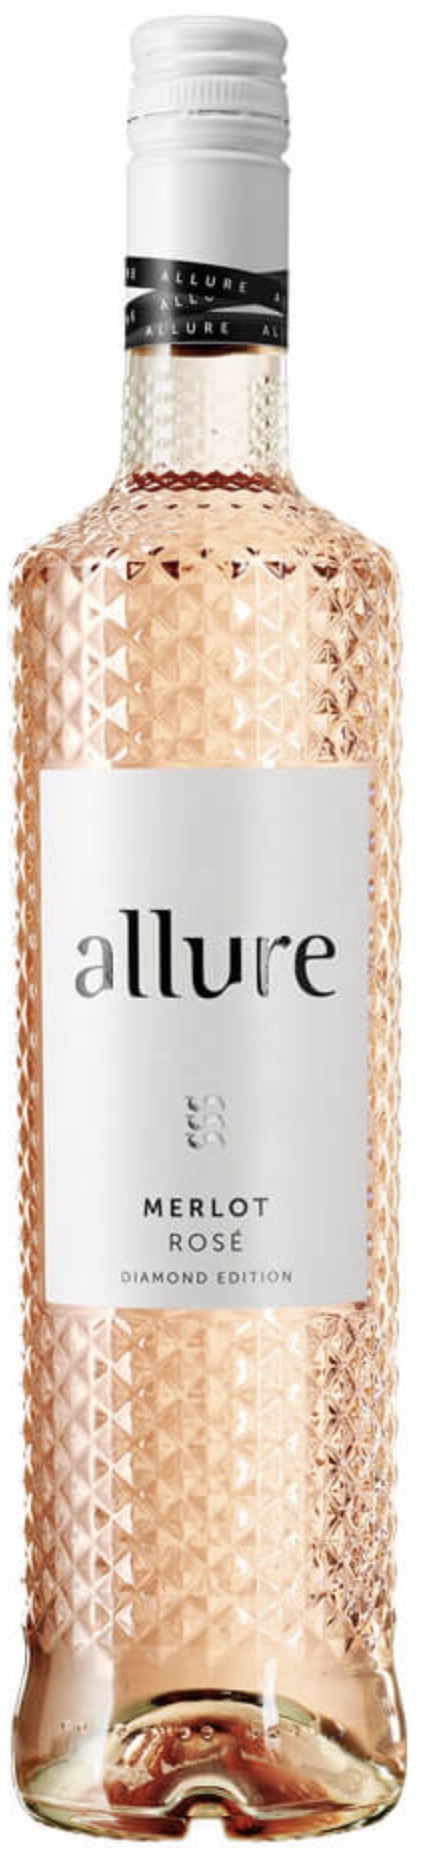 Allure Merlot Rosé halbtrocken 11% vol. 0,75L